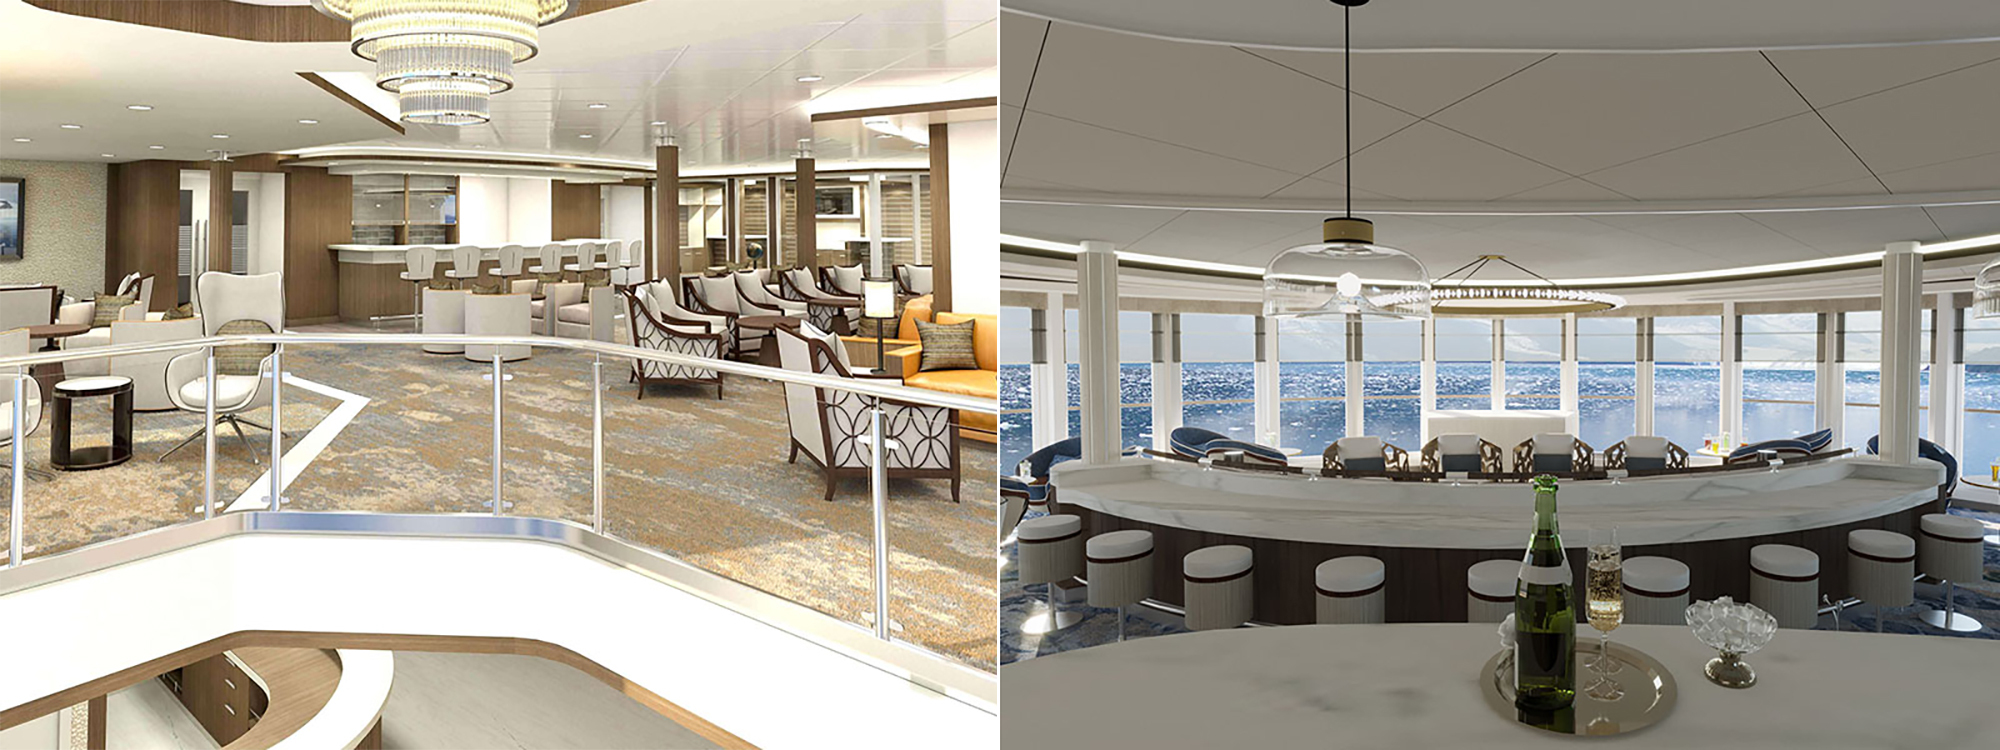 All interior illustrations based on the sister vessel, the 'Ocean Explorer', courtesy of SunStone Ships.